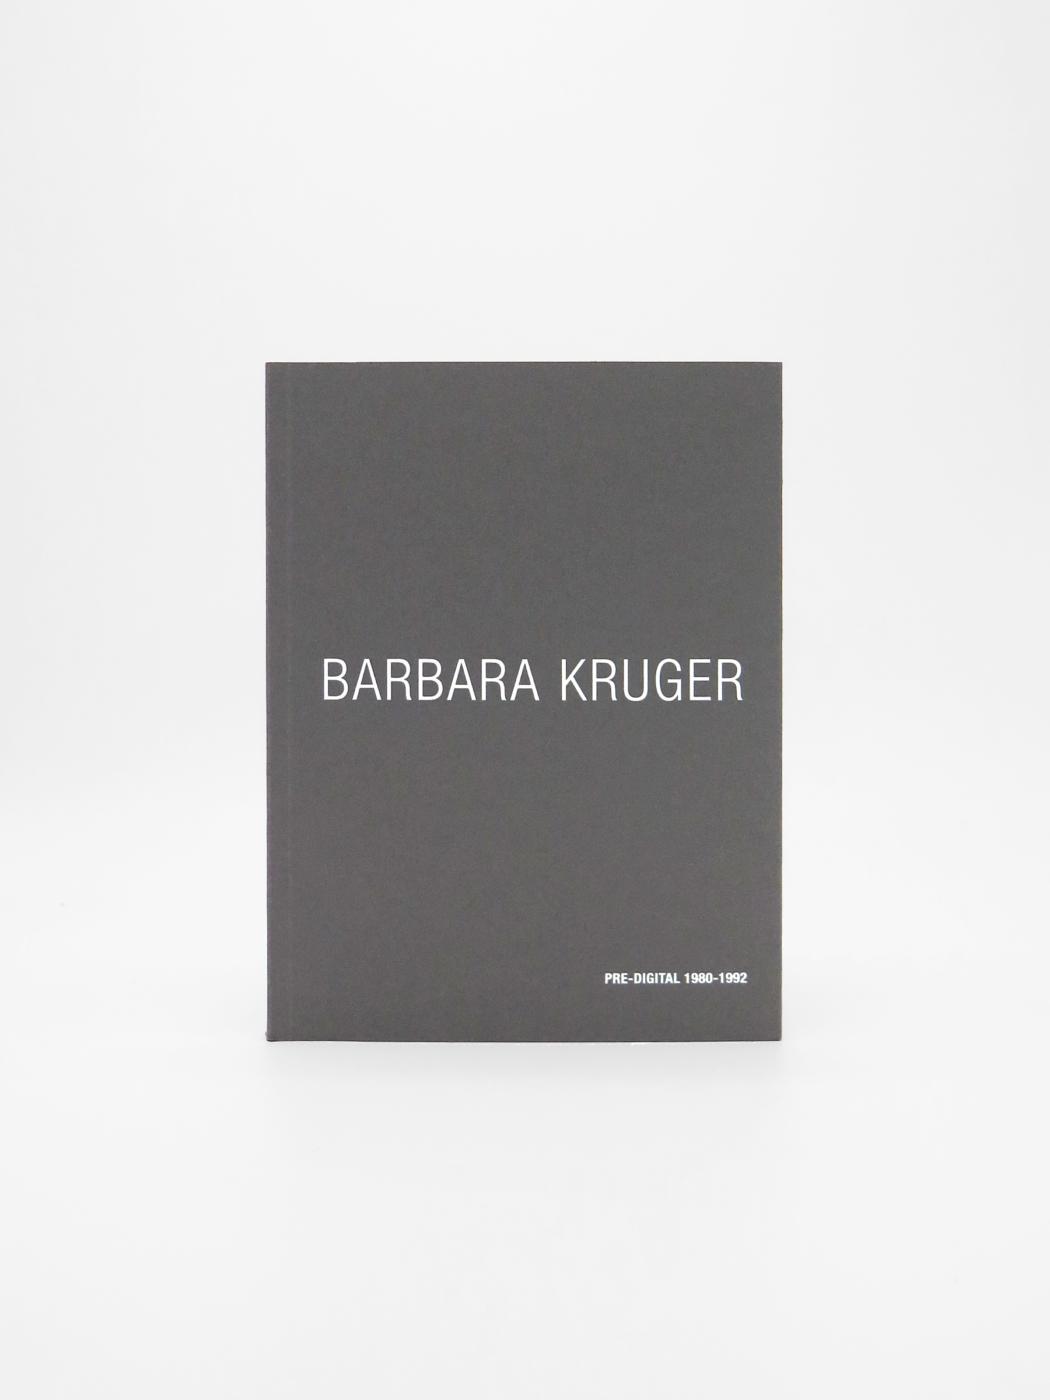 Barbara Kruger, Pre-Digital 1980-1992